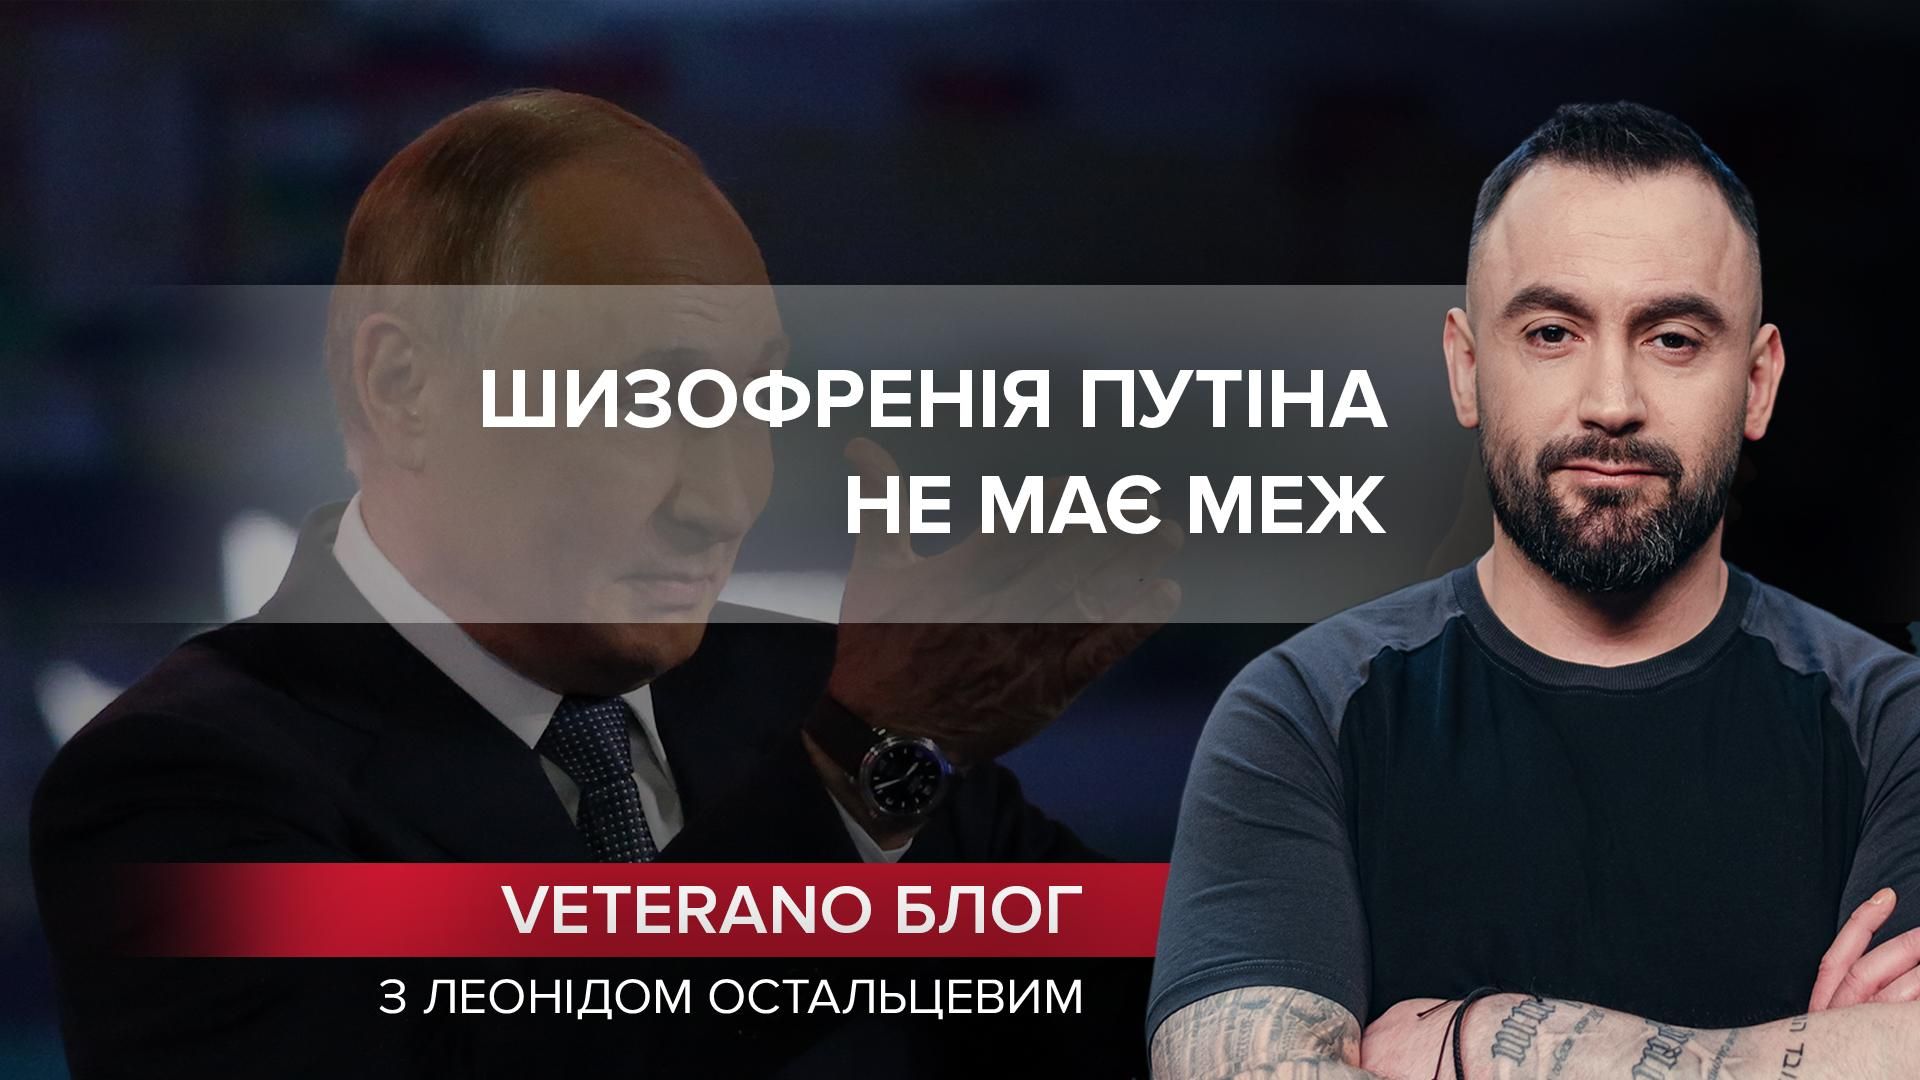 Неизвестно, успокоится ли: в голове Путина – необъятная шизофрения - Новости России - 24 Канал